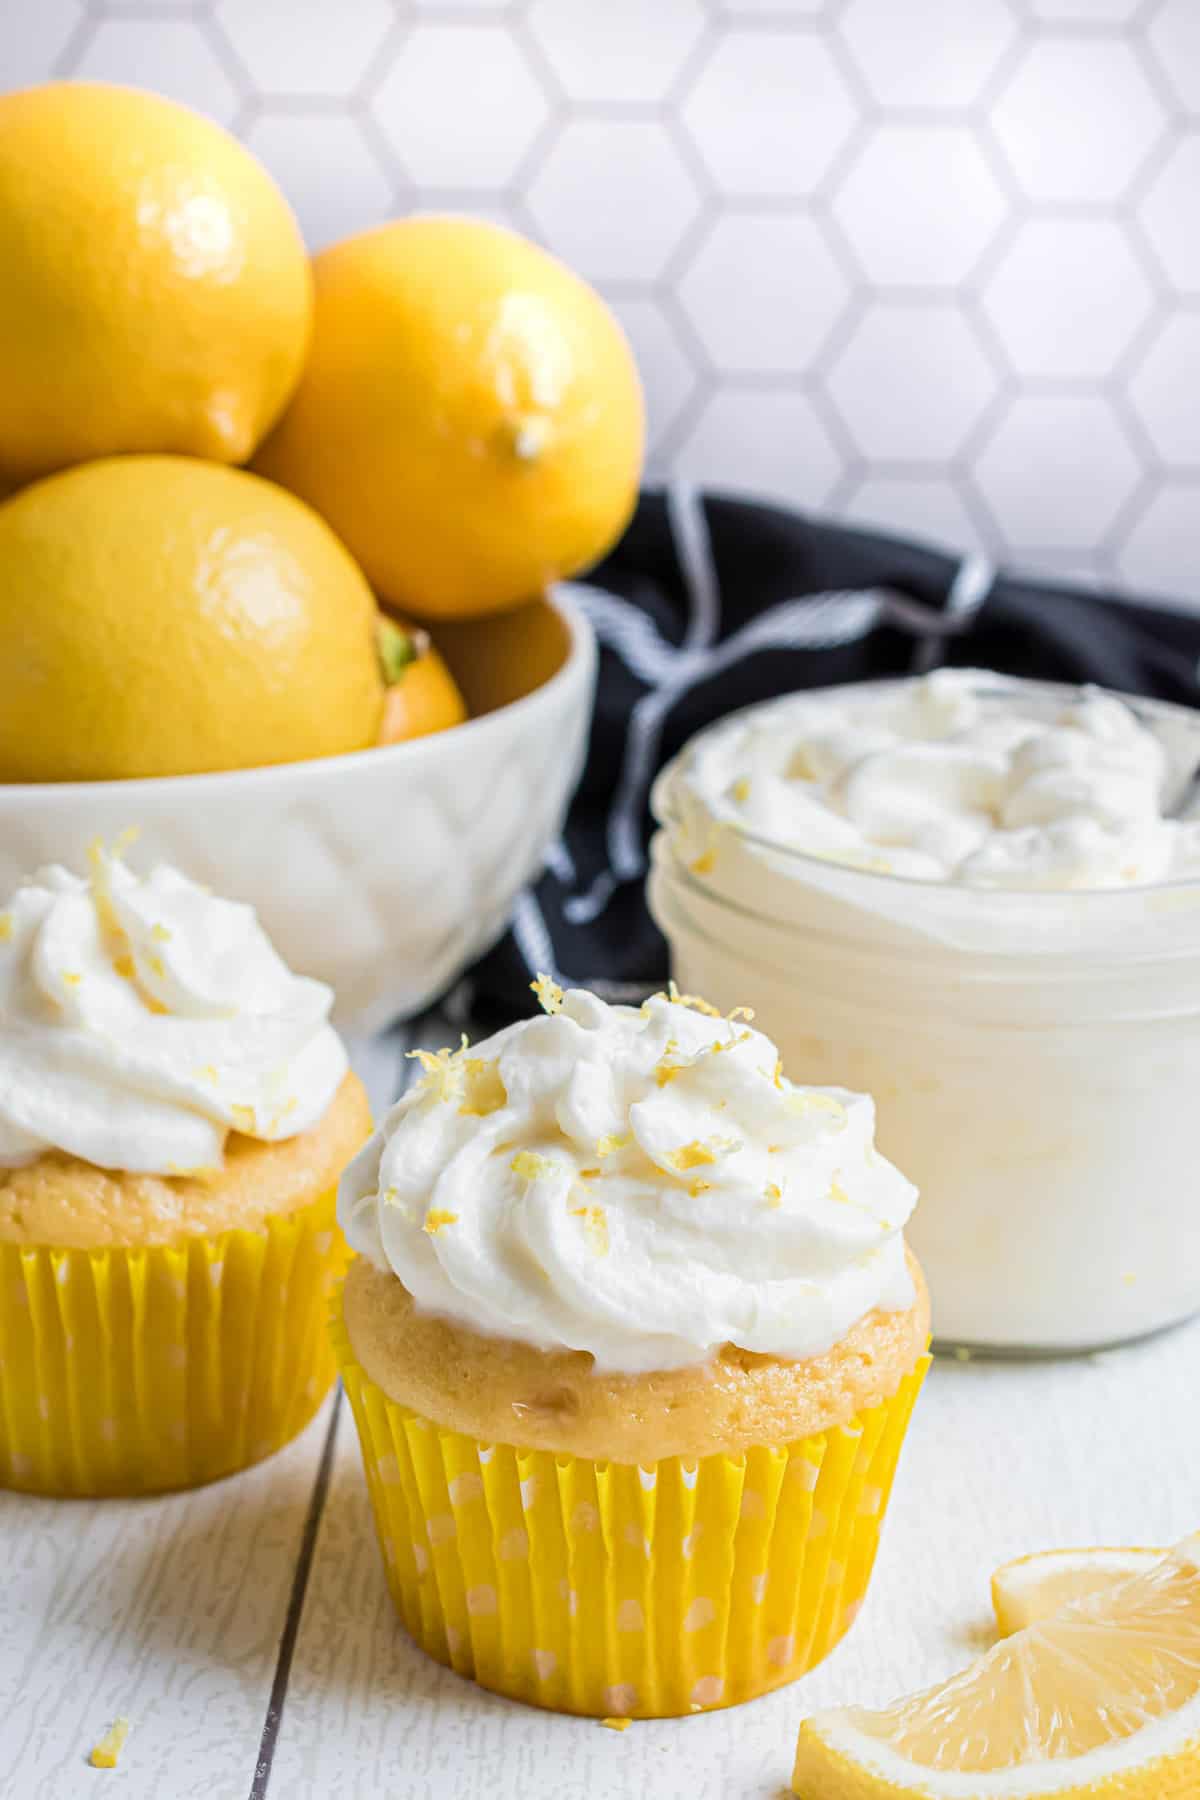 Lemon whipped cream on a cupcake.